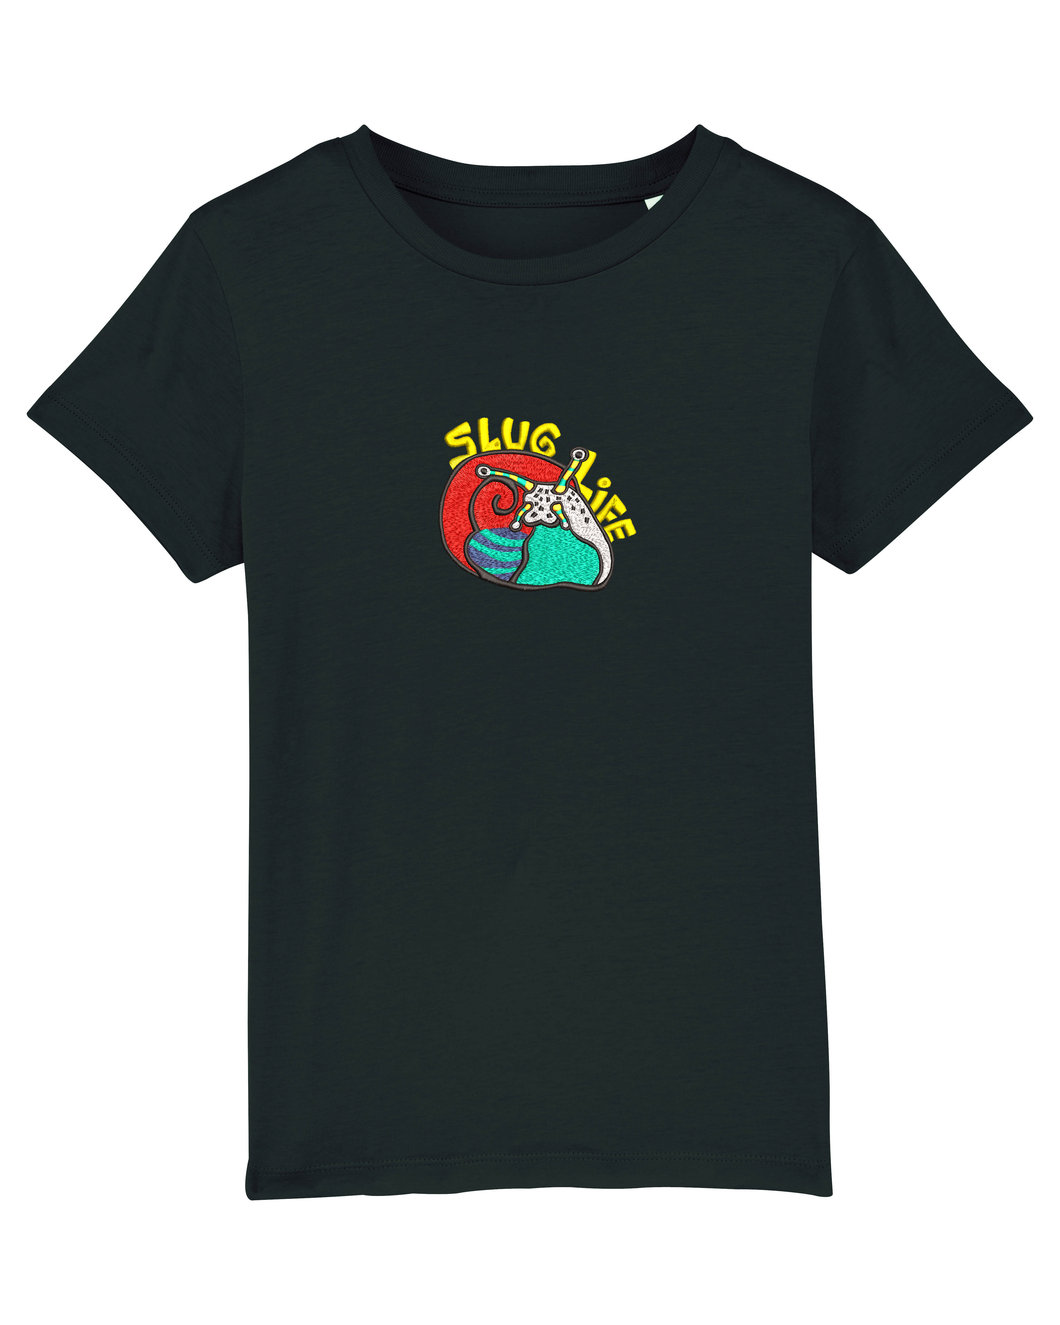 Slug life🐌- Embroidered kids tshirt